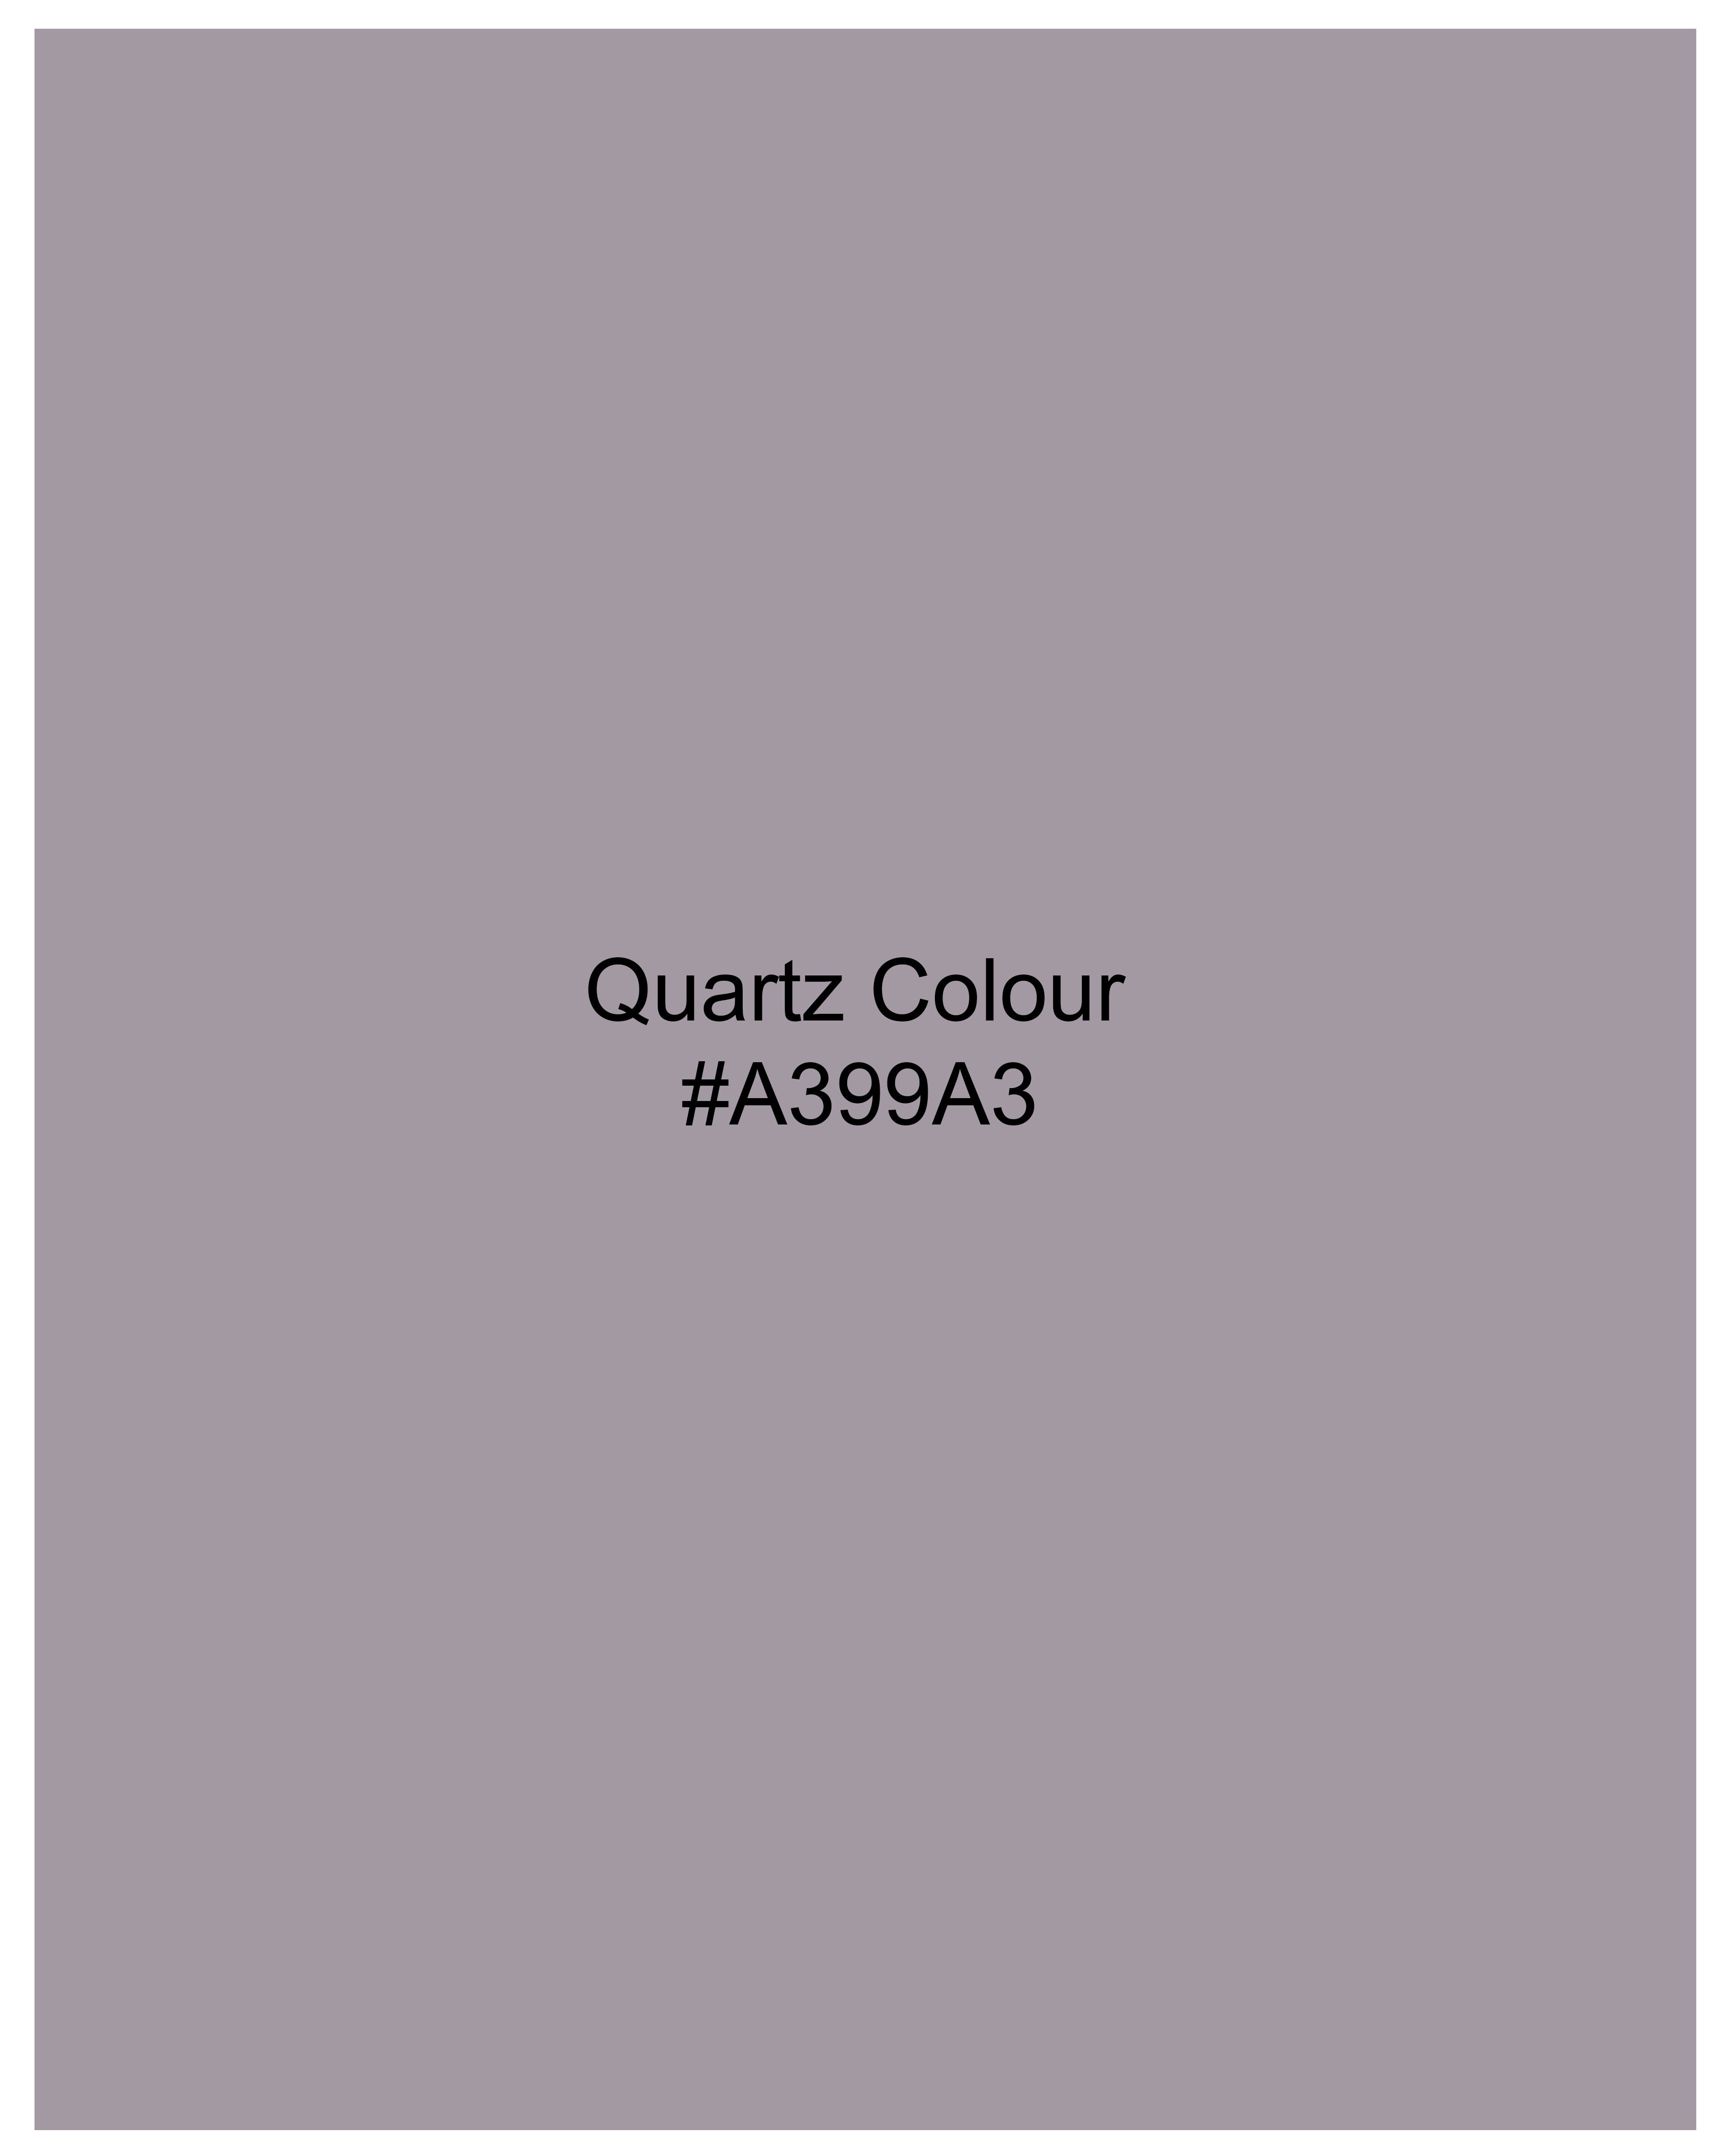 Quartz Gray Textured Royal Oxford Designer Shirt 9407-BLK-P398-38, 9407-BLK-P398-H-38, 9407-BLK-P398-39, 9407-BLK-P398-H-39, 9407-BLK-P398-40, 9407-BLK-P398-H-40, 9407-BLK-P398-42, 9407-BLK-P398-H-42, 9407-BLK-P398-44, 9407-BLK-P398-H-44, 9407-BLK-P398-46, 9407-BLK-P398-H-46, 9407-BLK-P398-48, 9407-BLK-P398-H-48, 9407-BLK-P398-50, 9407-BLK-P398-H-50, 9407-BLK-P398-52, 9407-BLK-P398-H-52